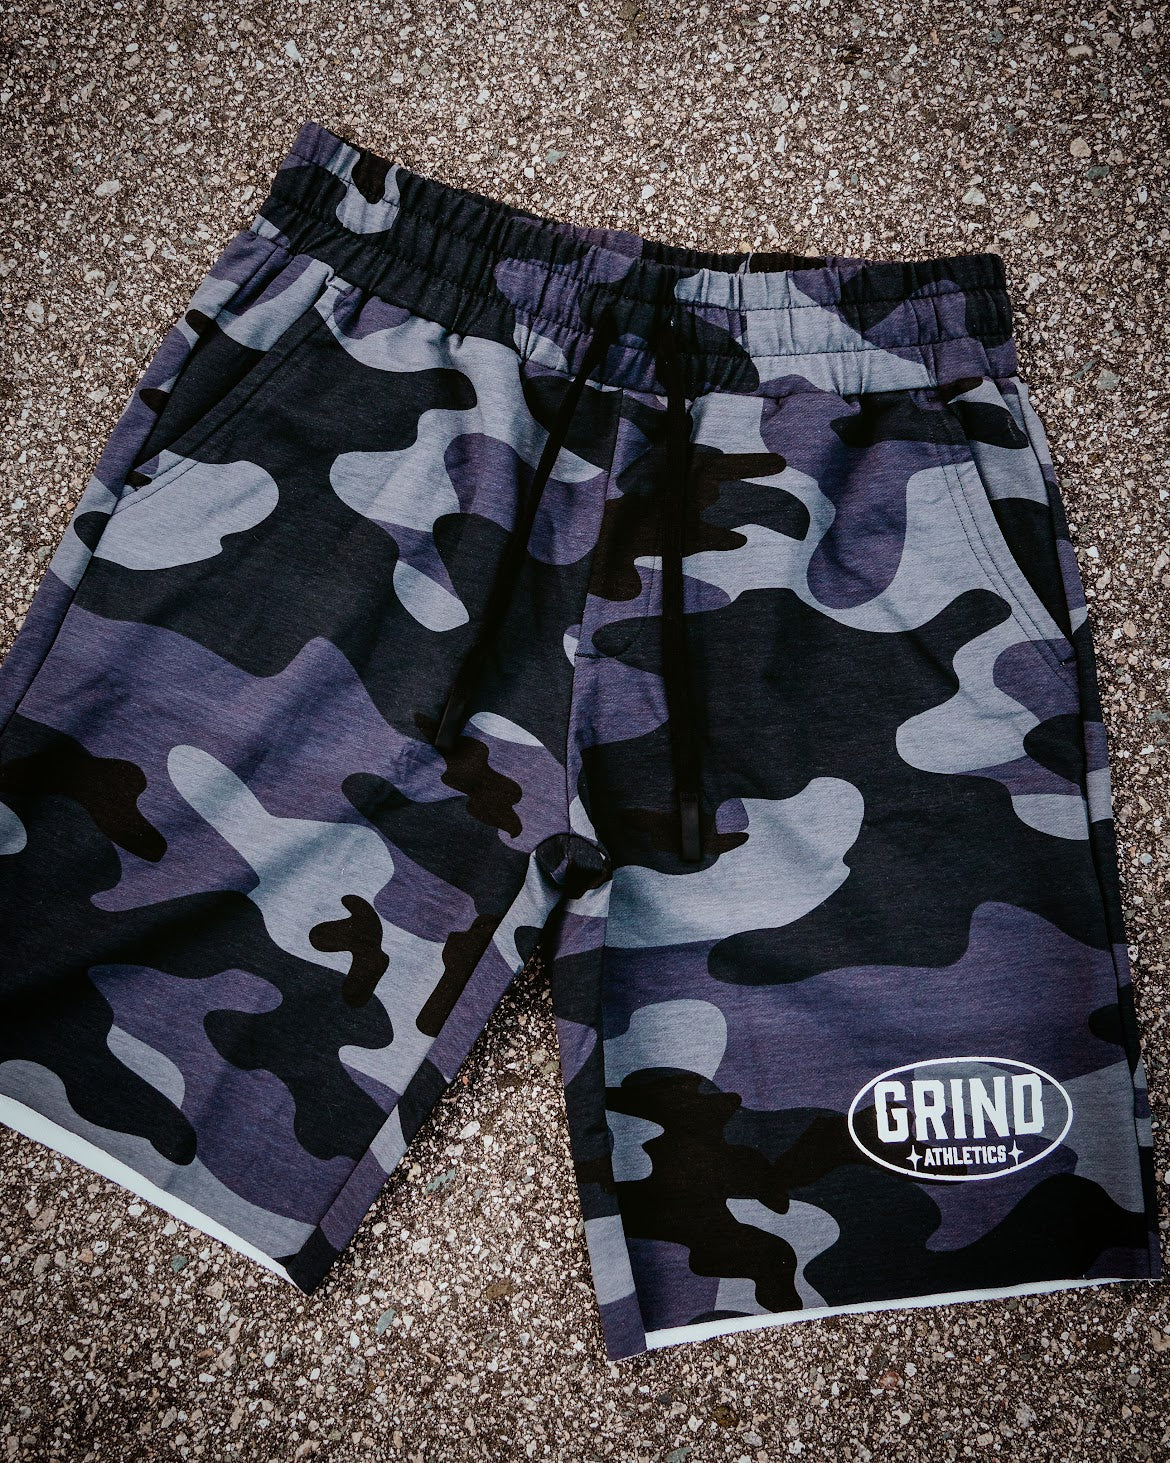 The Grind Athletics Classic Grind Shorts - Black Camo